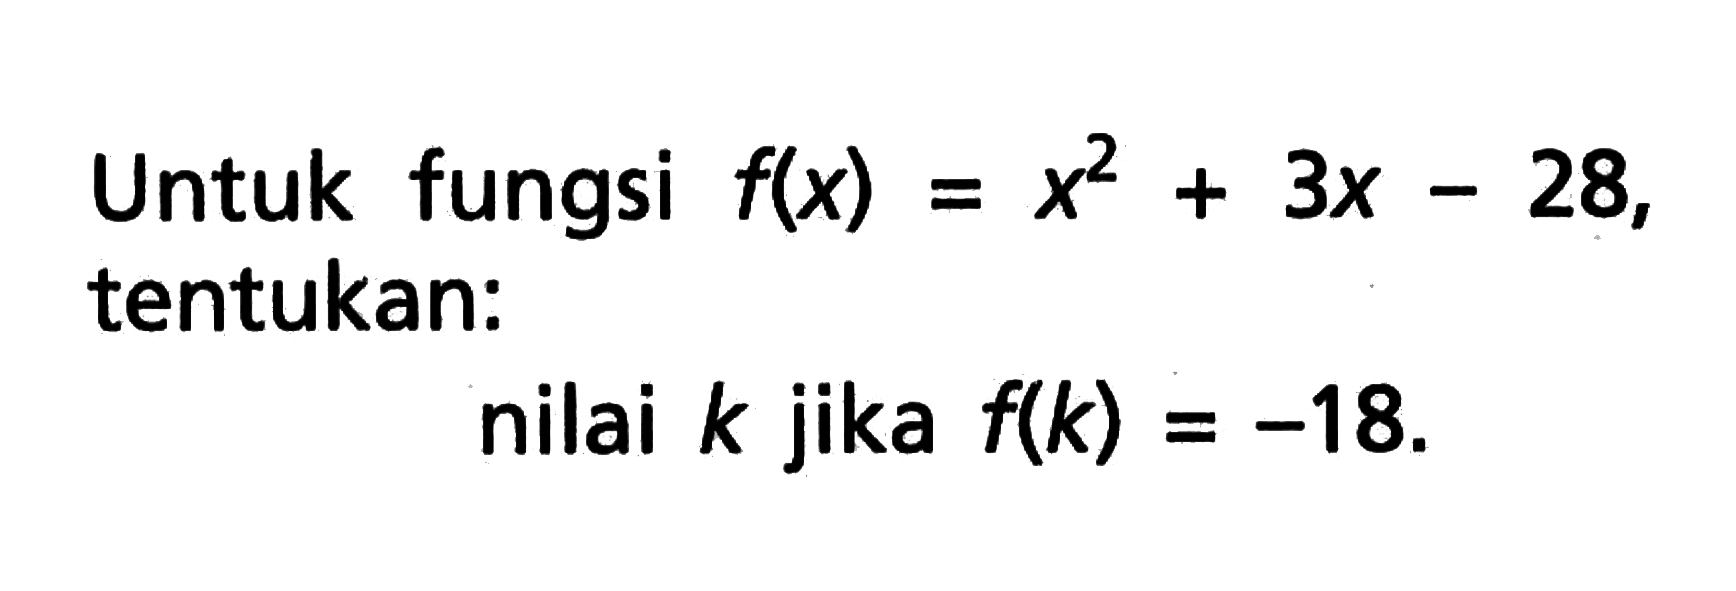 Untuk fungsi f(x) = x^2 + 3x - 28, tentukan: nilai k jika f(k) = -18.